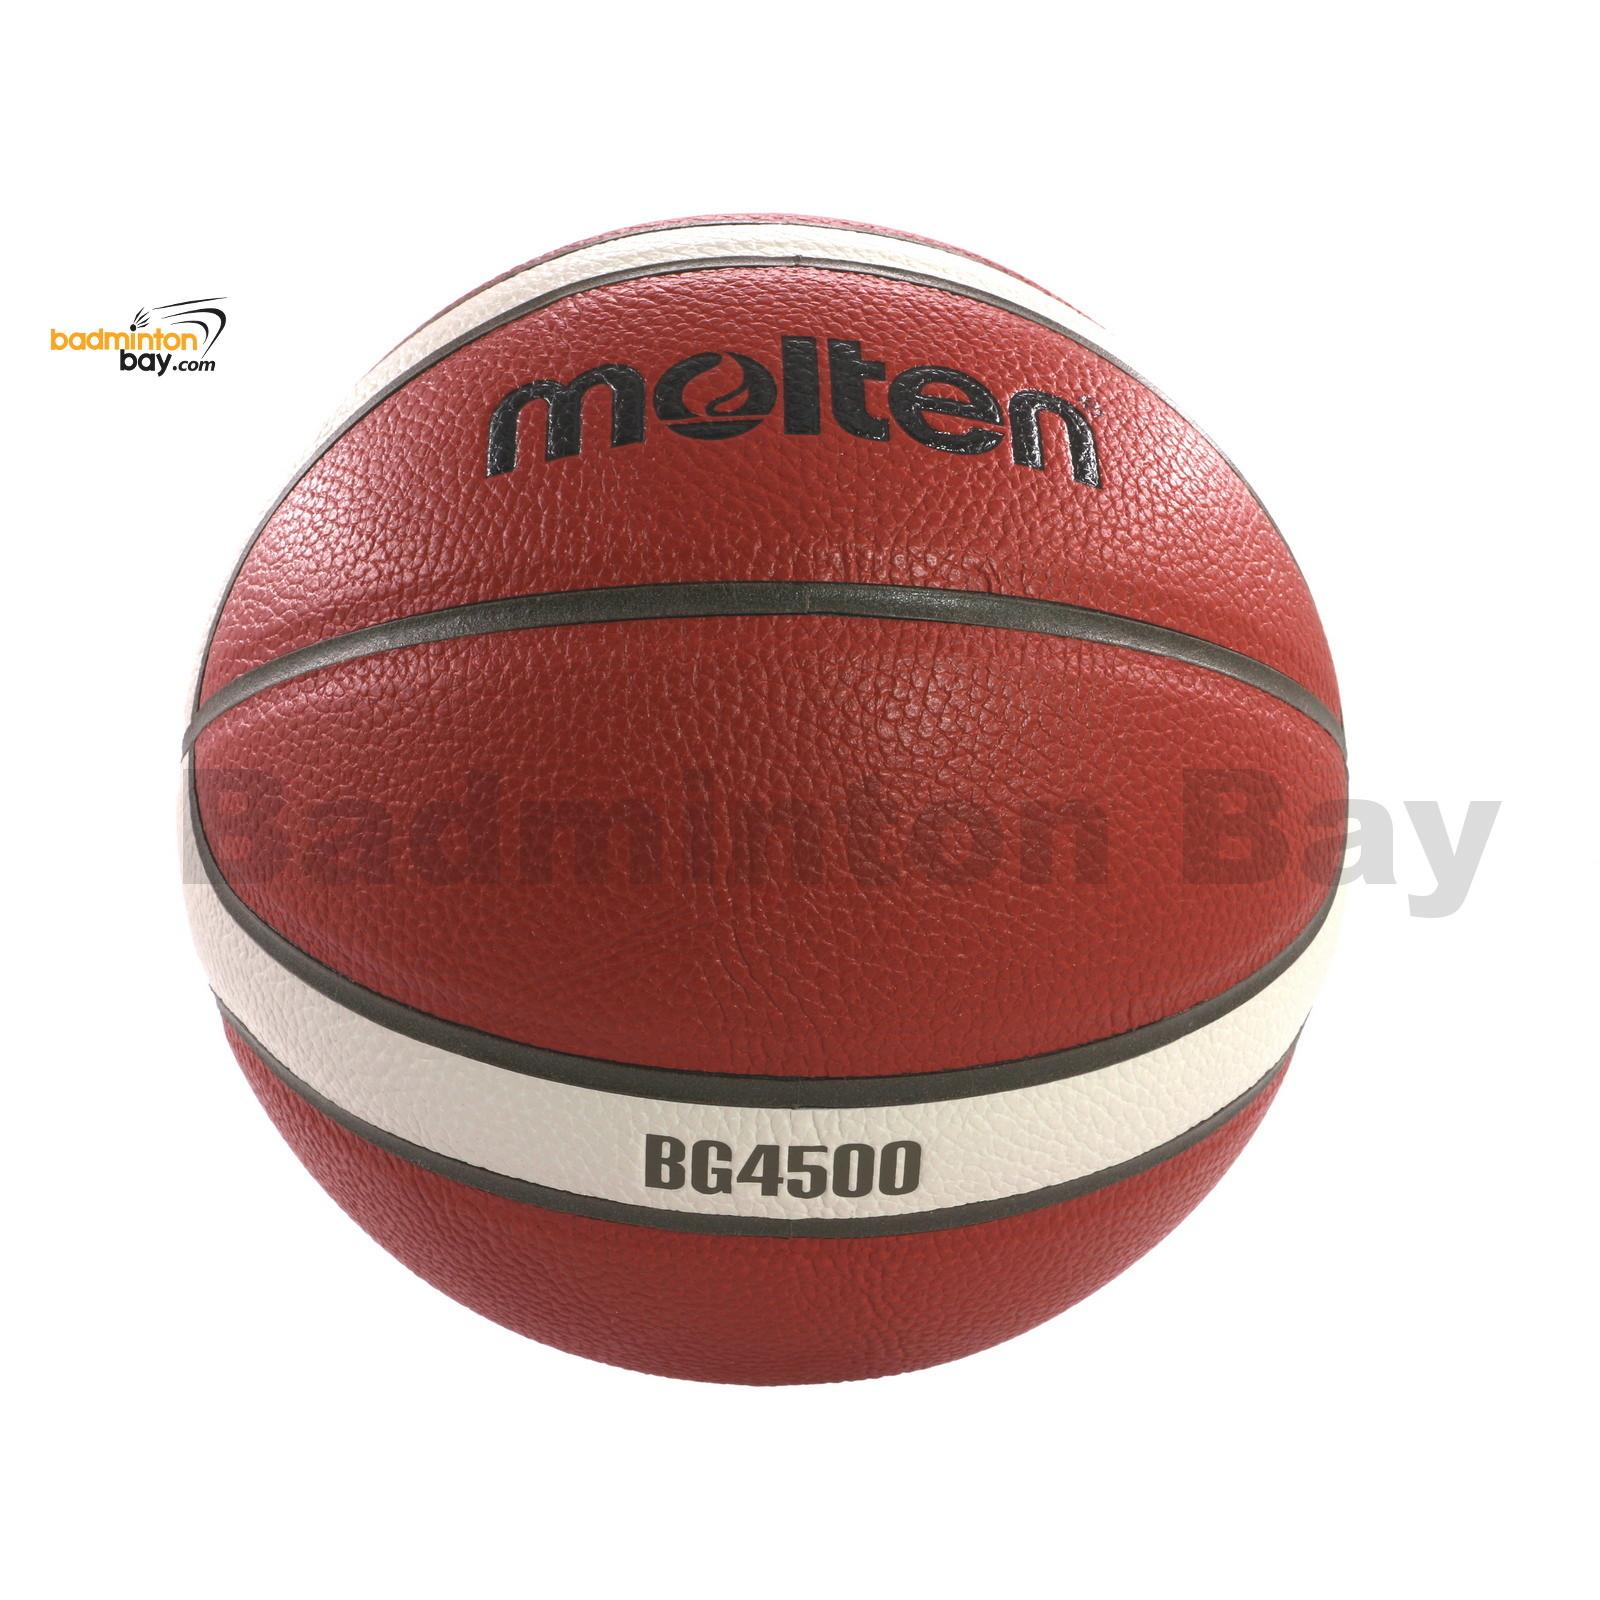 New 100% Genuine Molten BG4500 Composite Leather indoor Basketball 